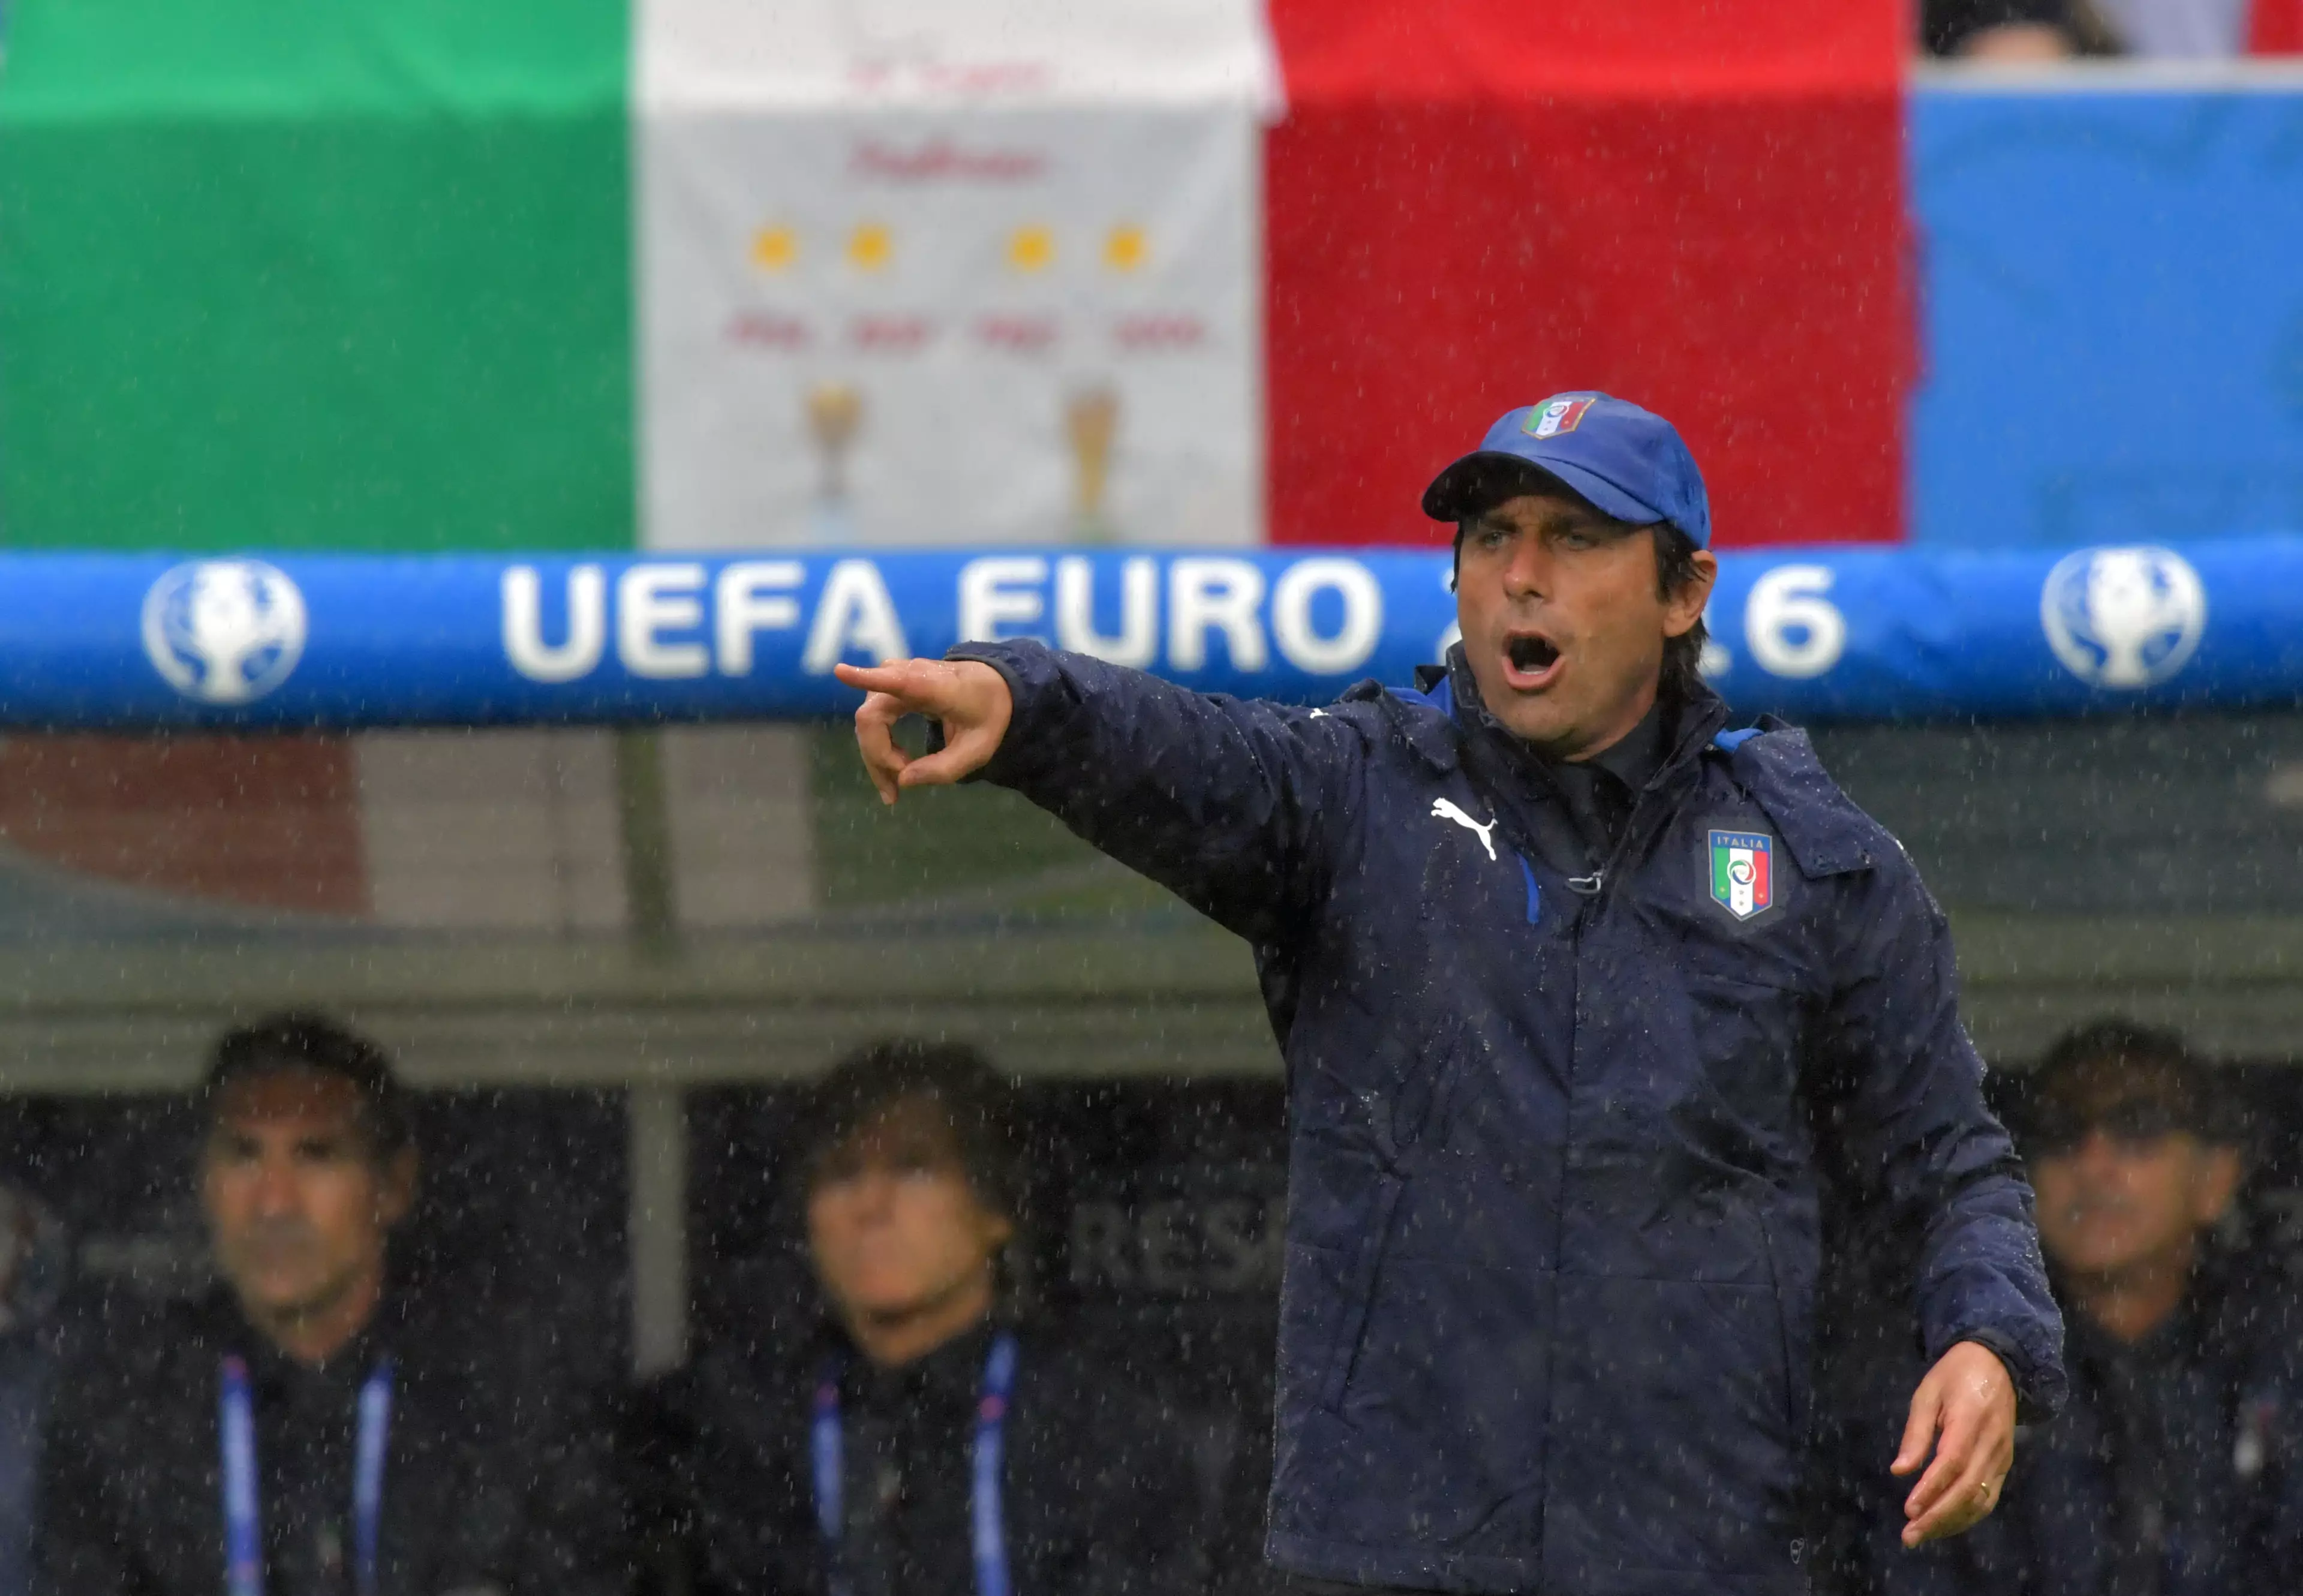 Conte managing at Euro 2016. Image: PA Images